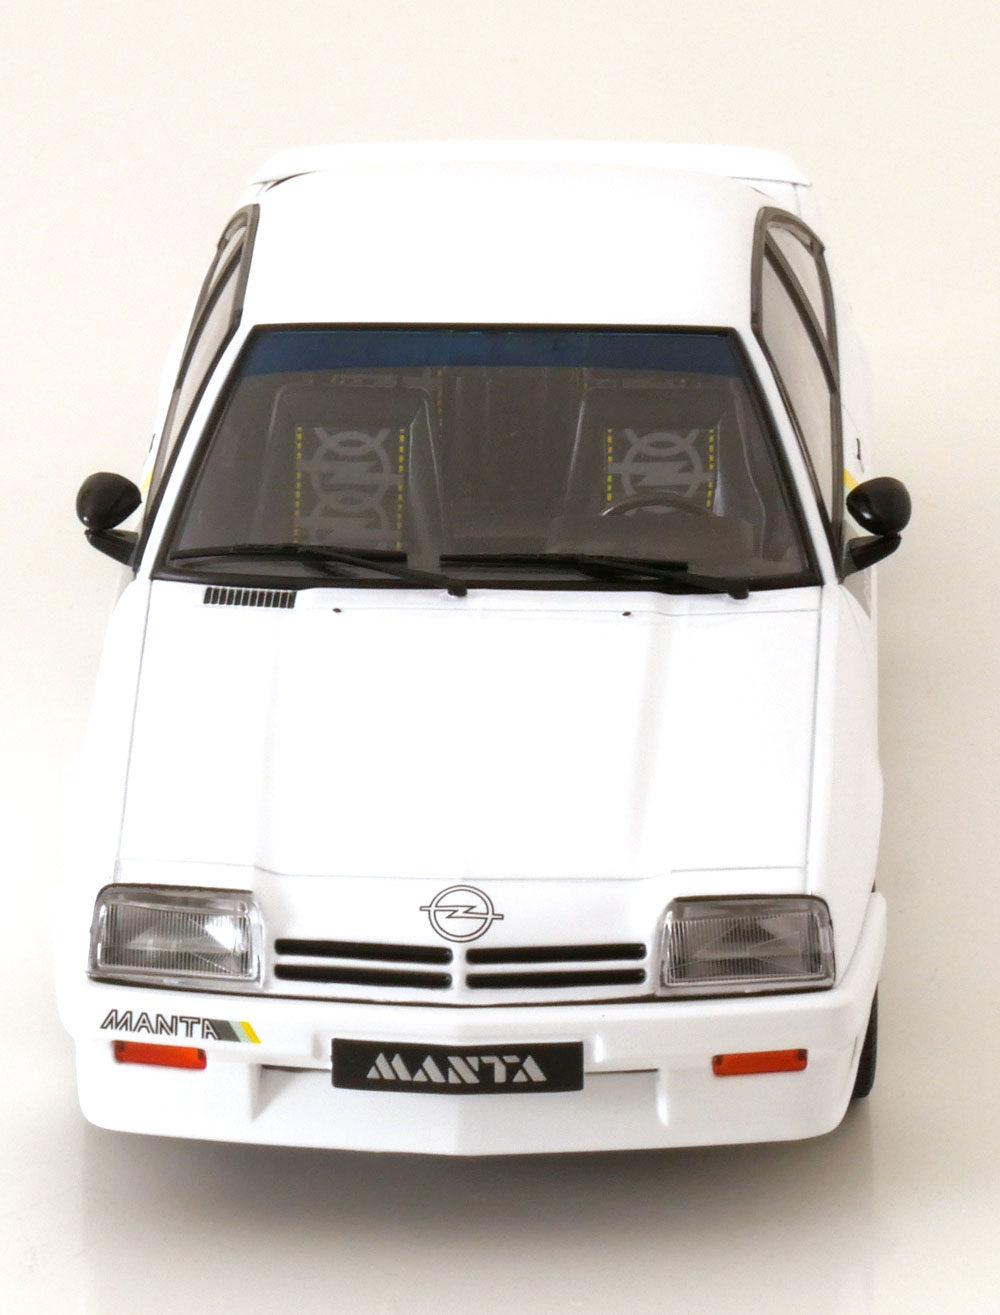 1:18 Norev Opel Manta 400 1982 white